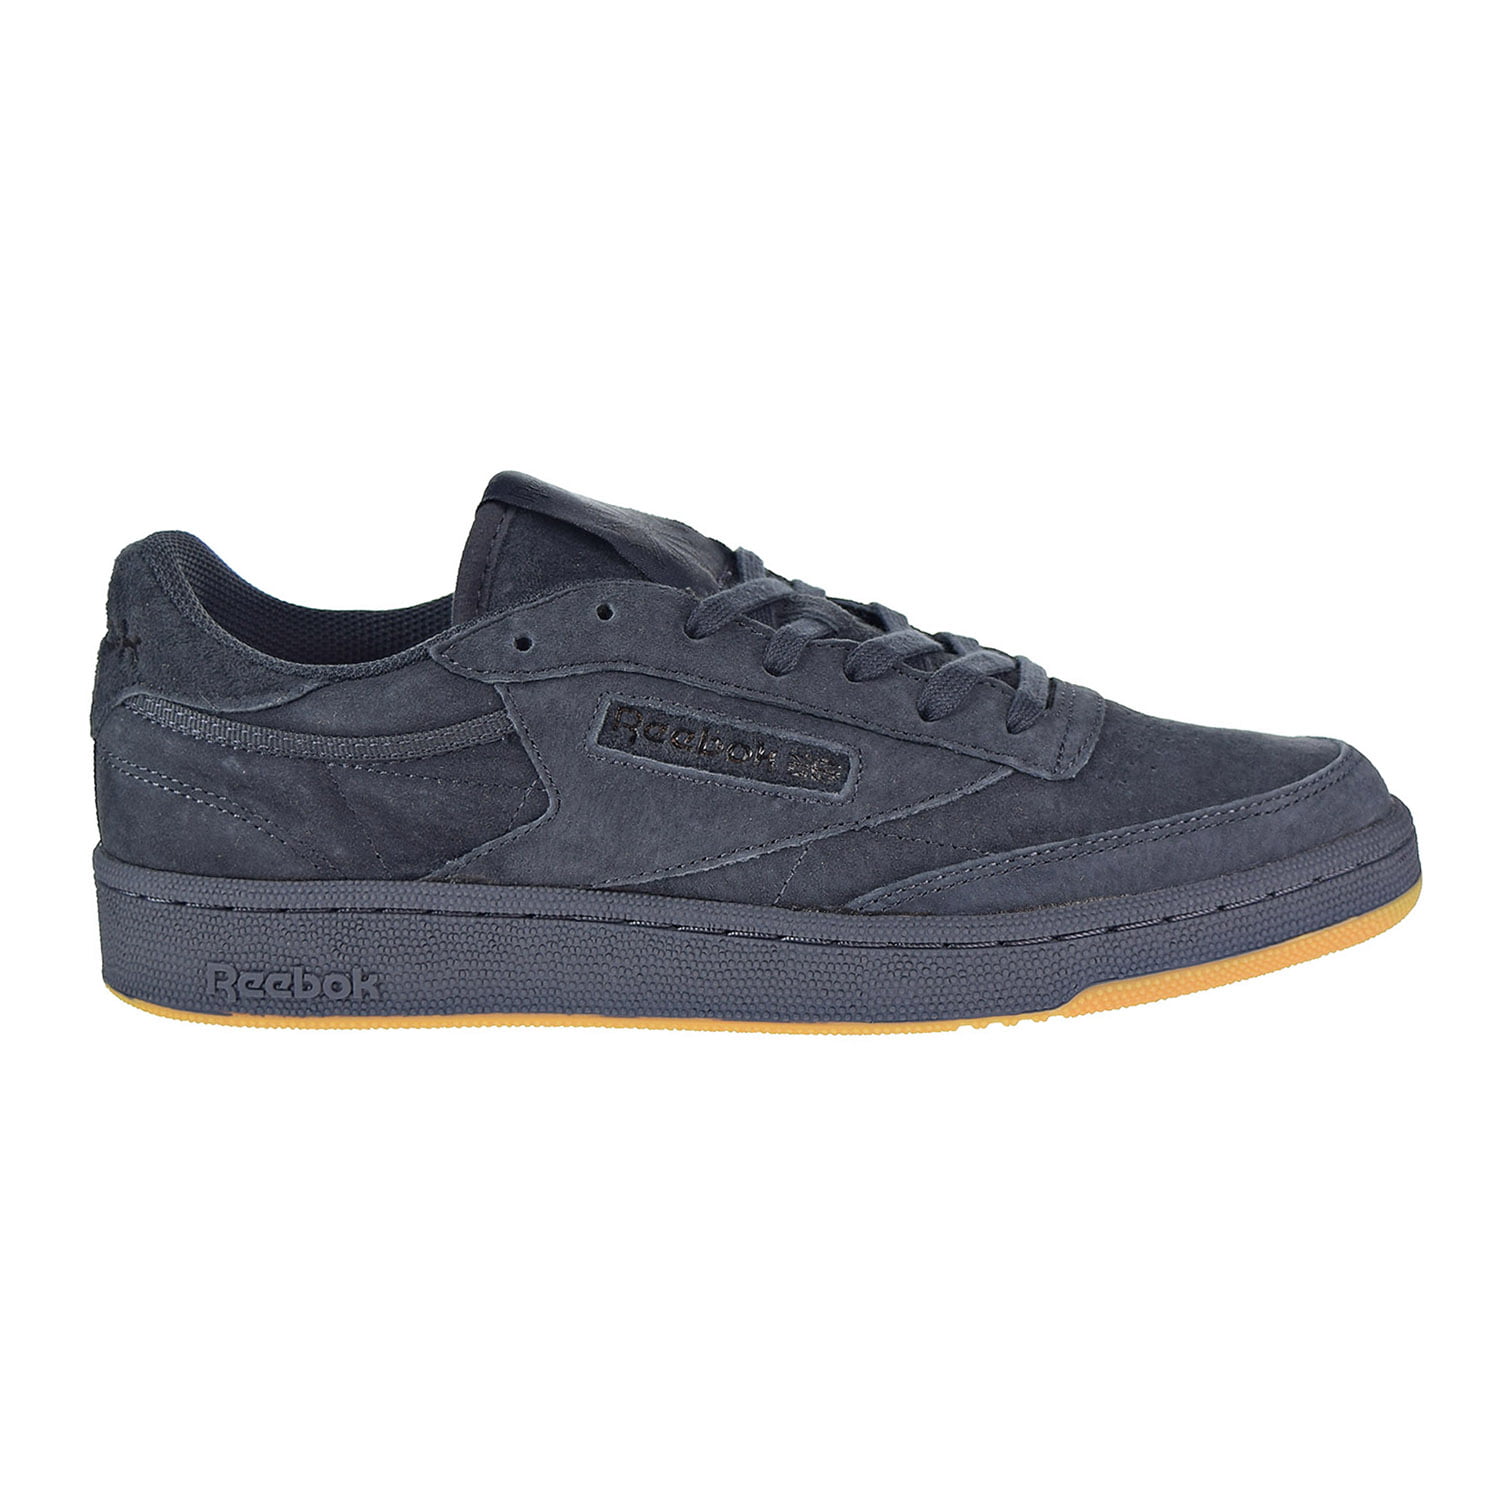 Reebok Club C TG Men's Shoes Lead/Black bd1885 - Walmart.com